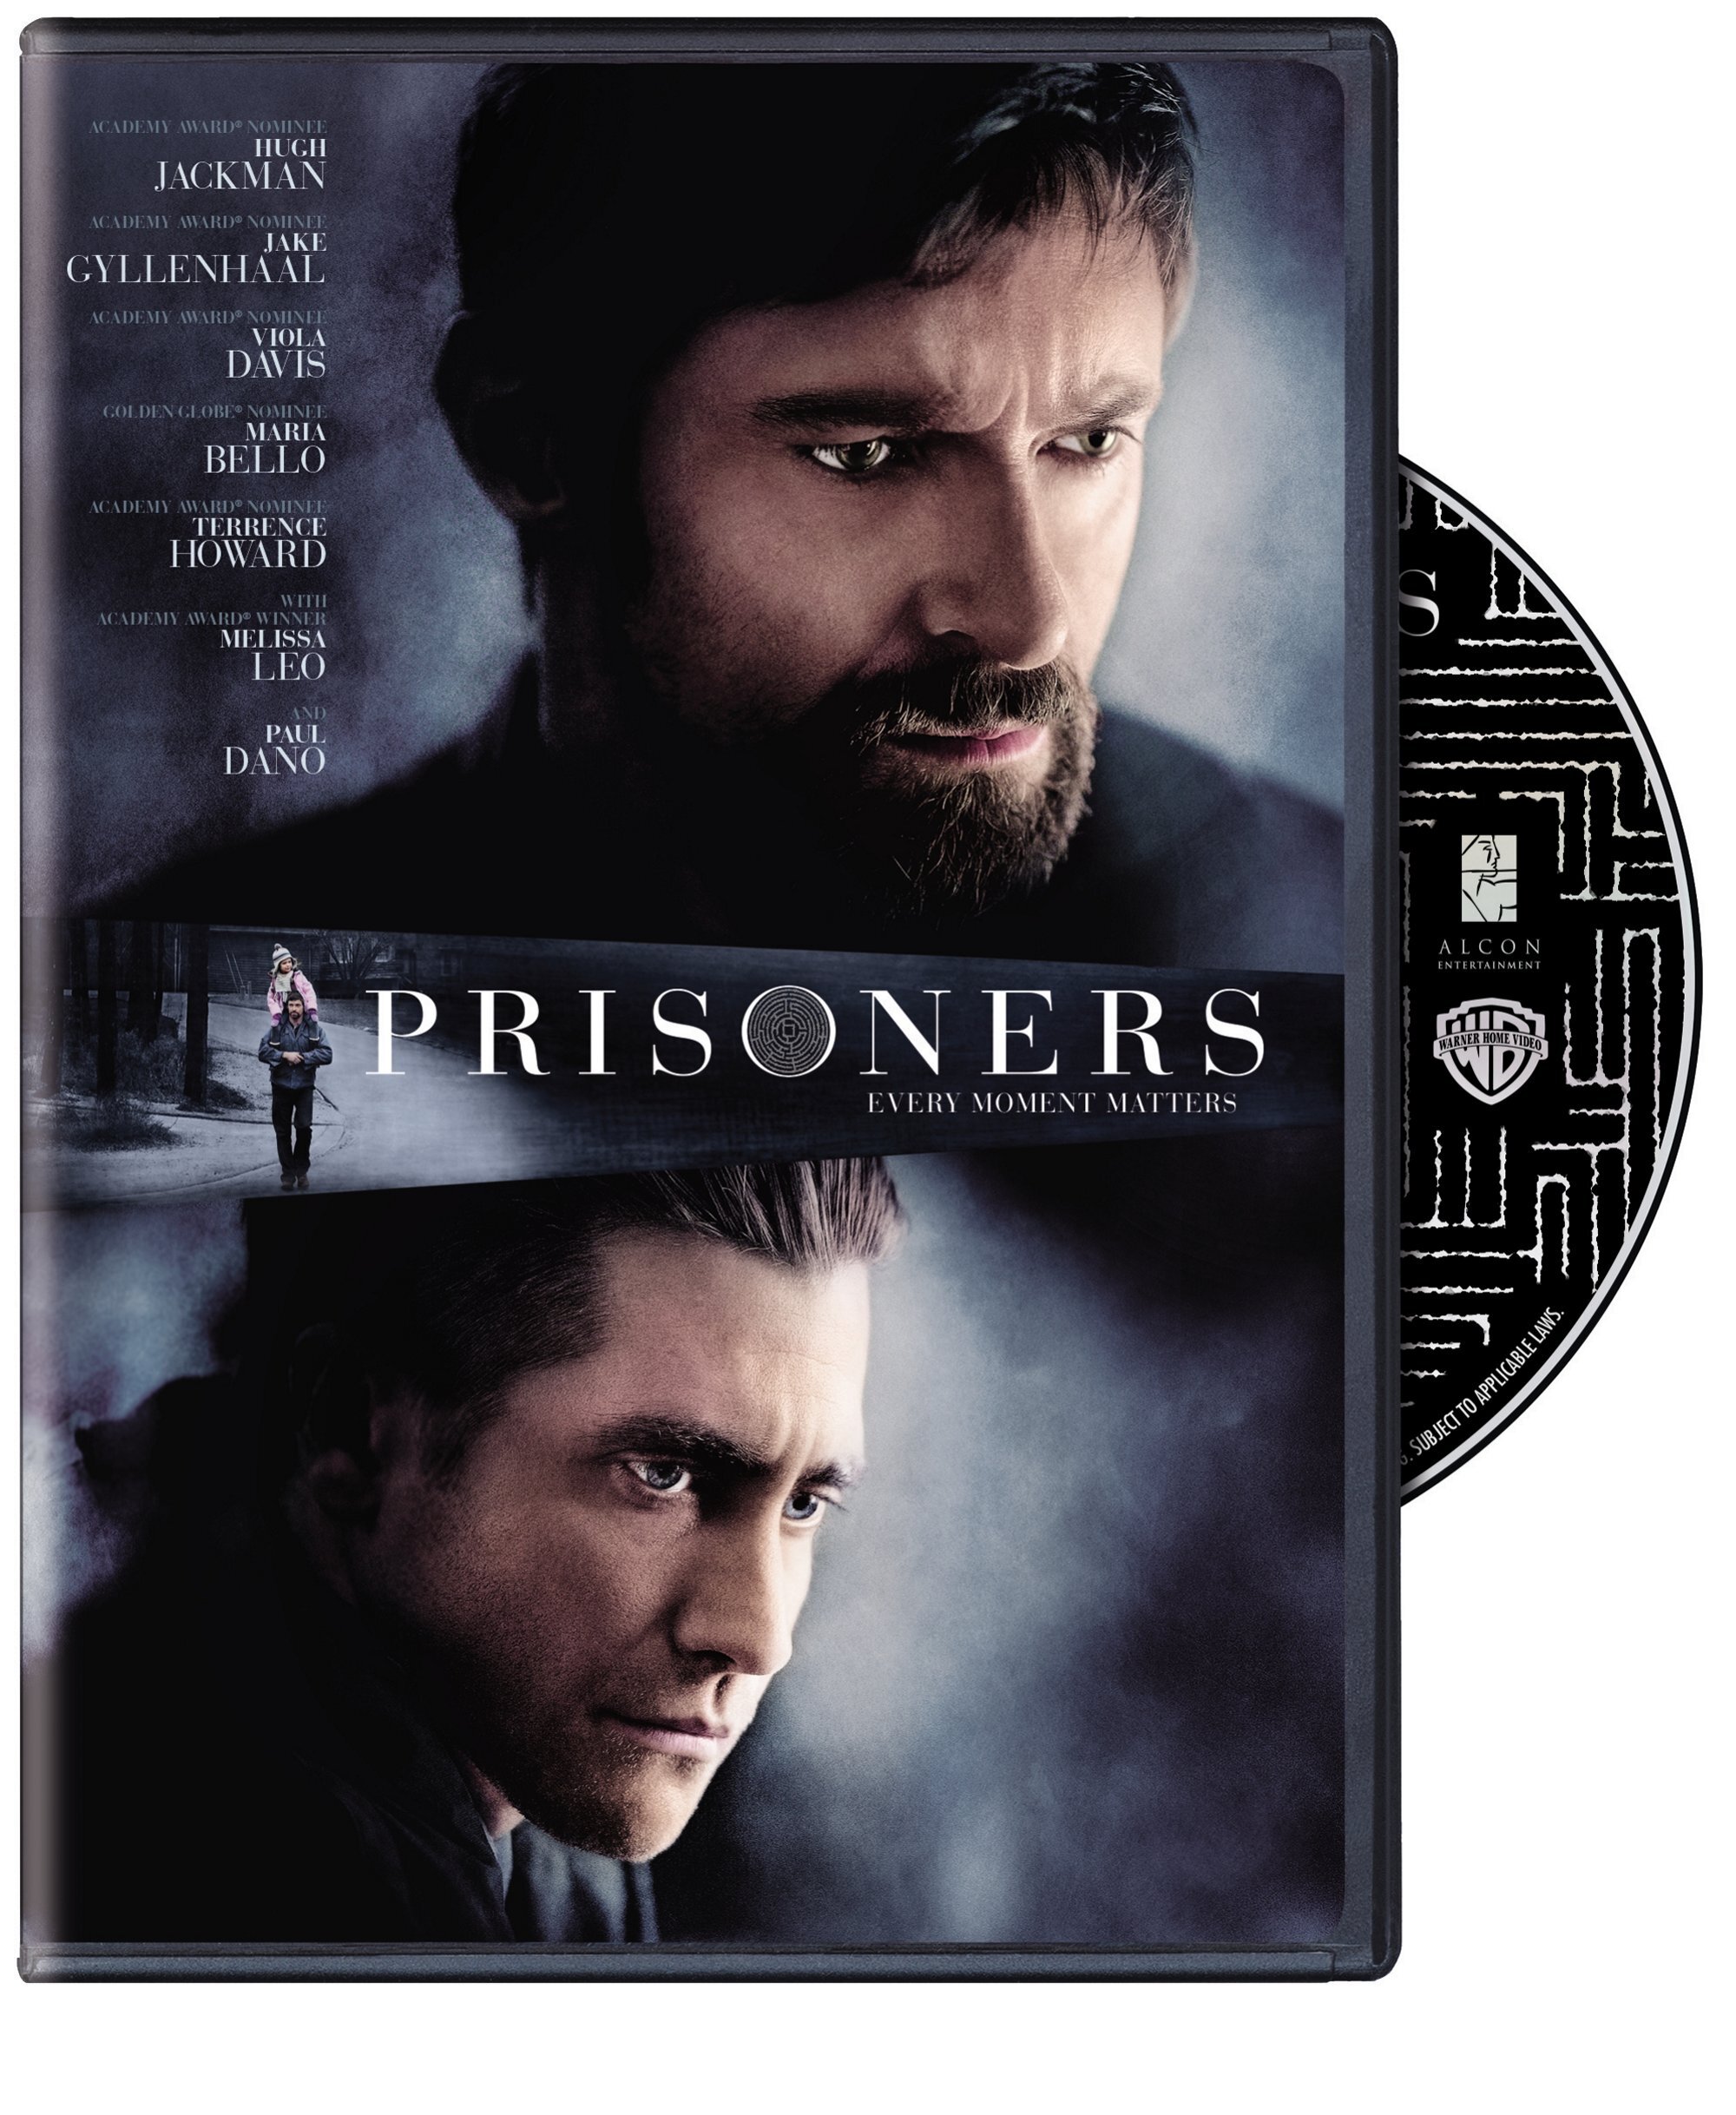 Prisoners - DVD [ 2013 ]  - Thriller Movies On DVD - Movies On GRUV